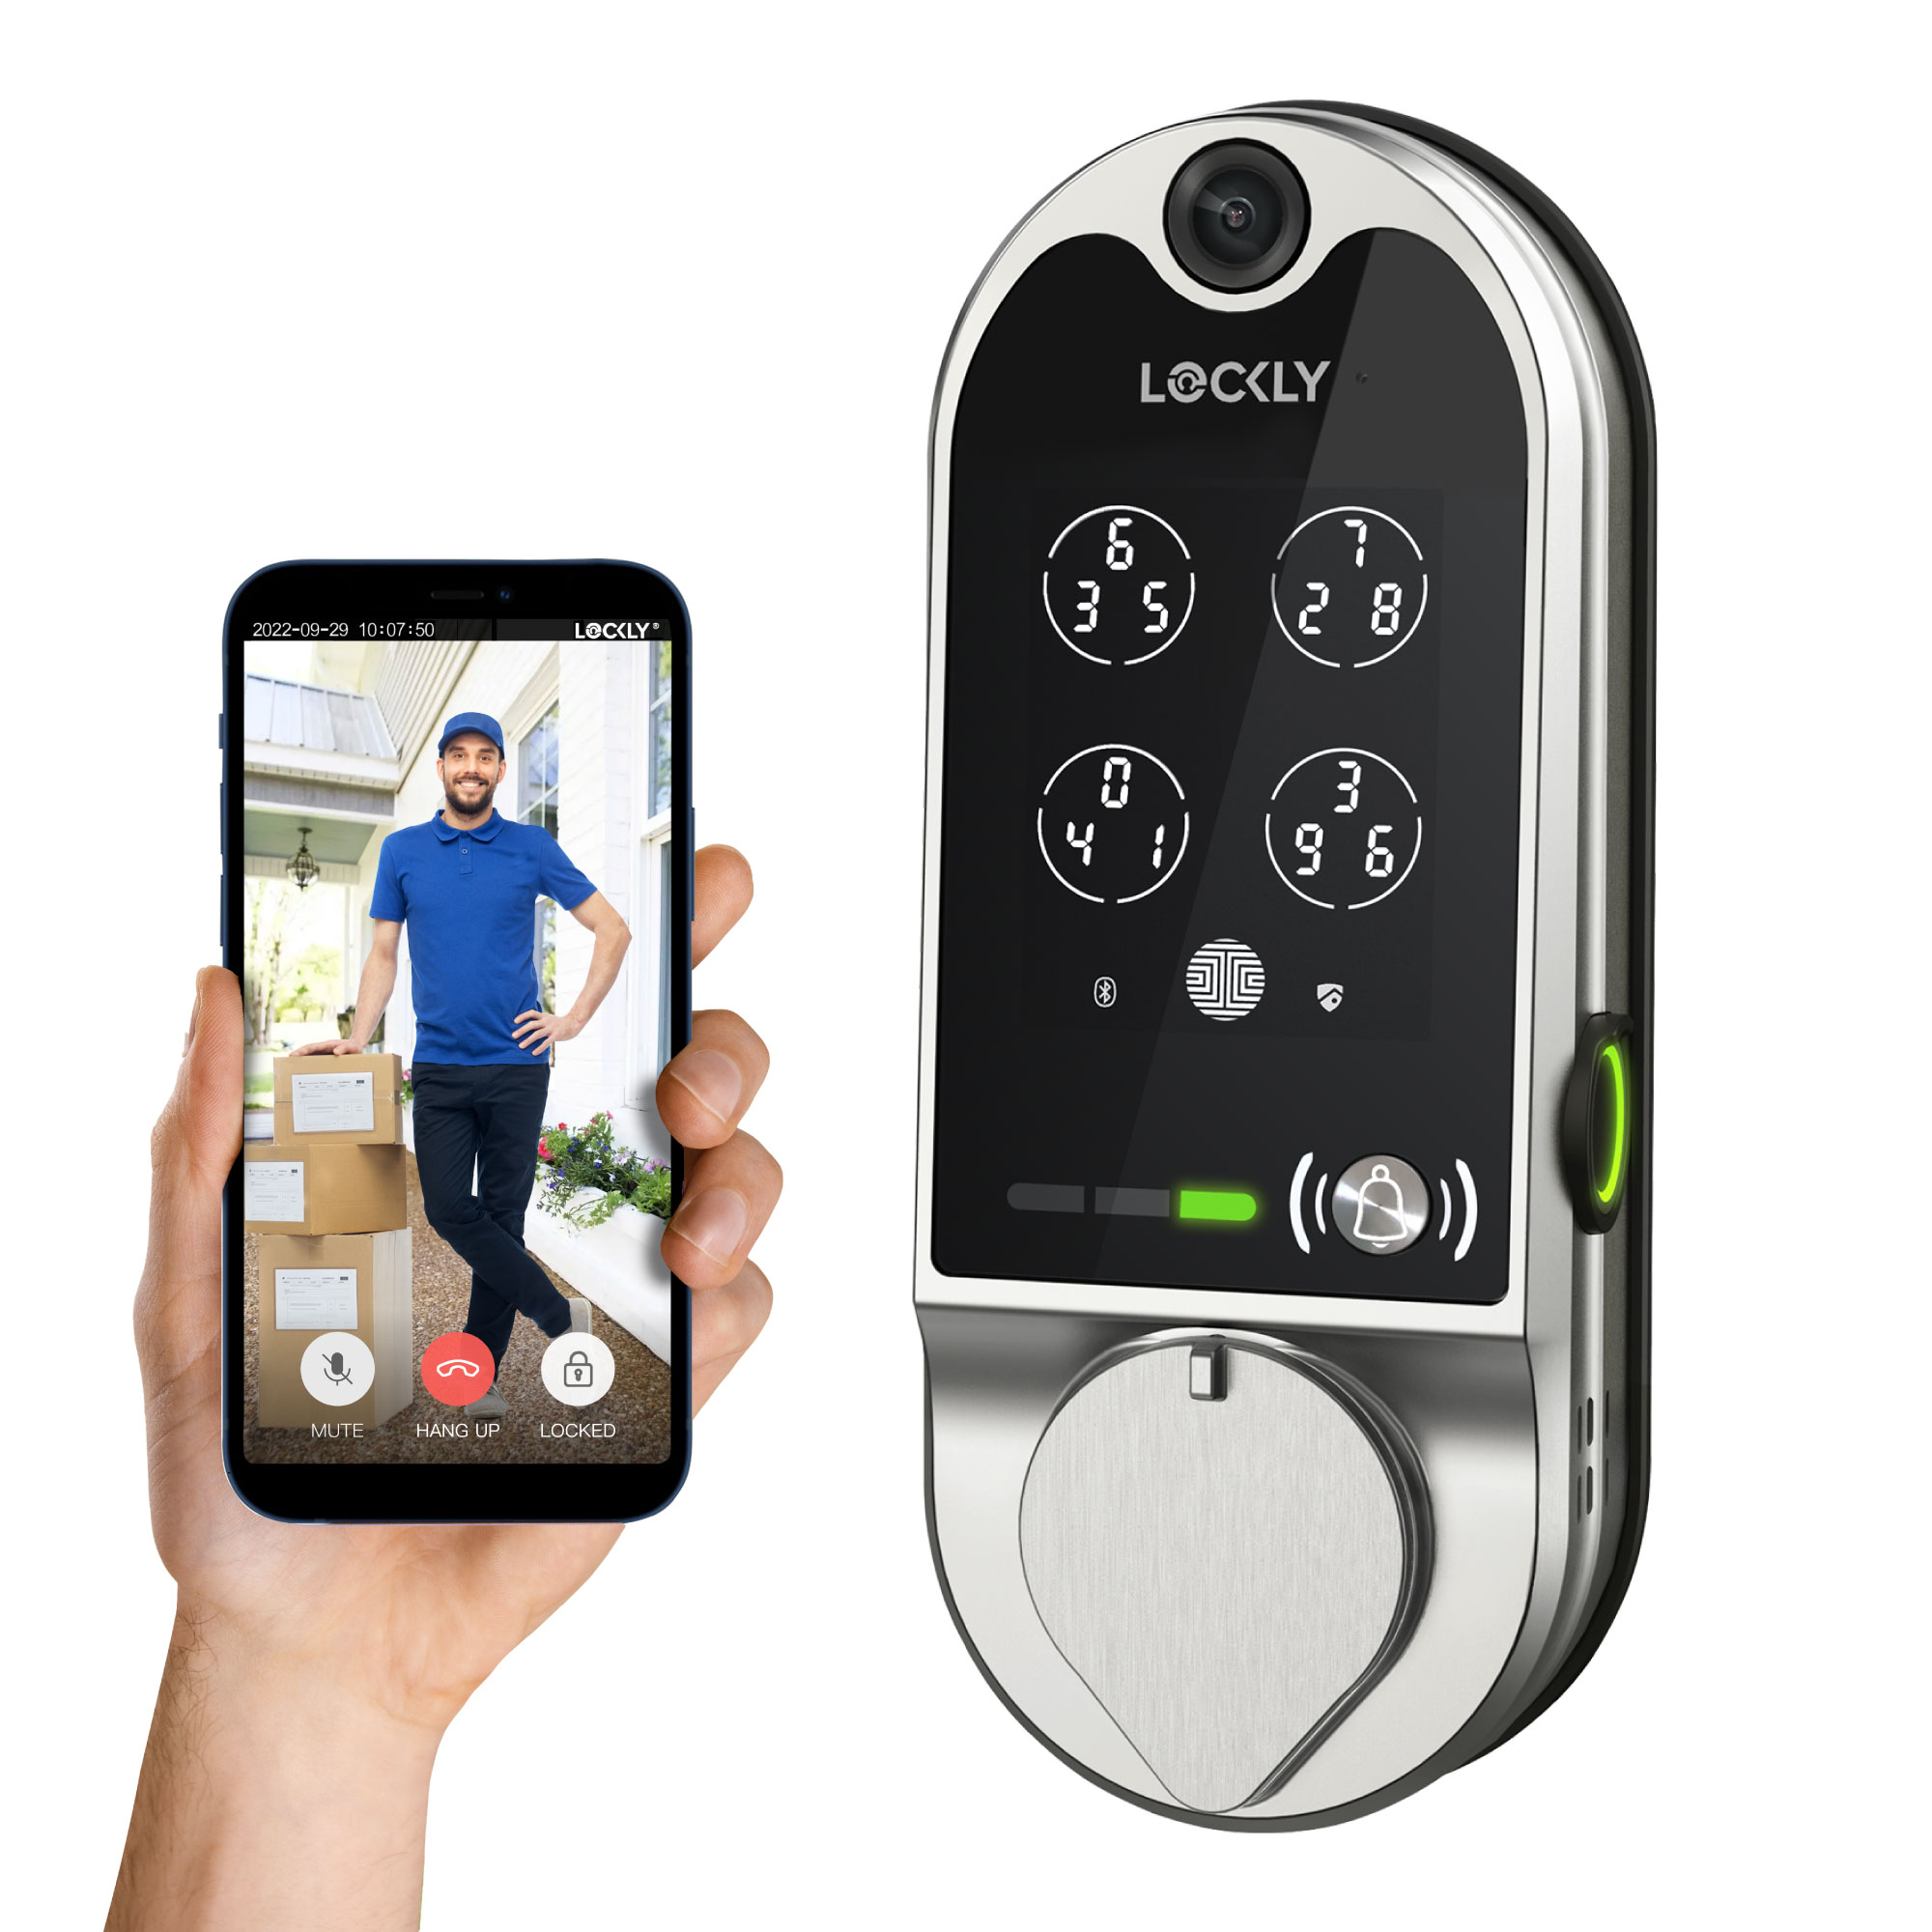 Handy Series – 31B Keyless Entry Smart Door Lock (Modern & Smart)